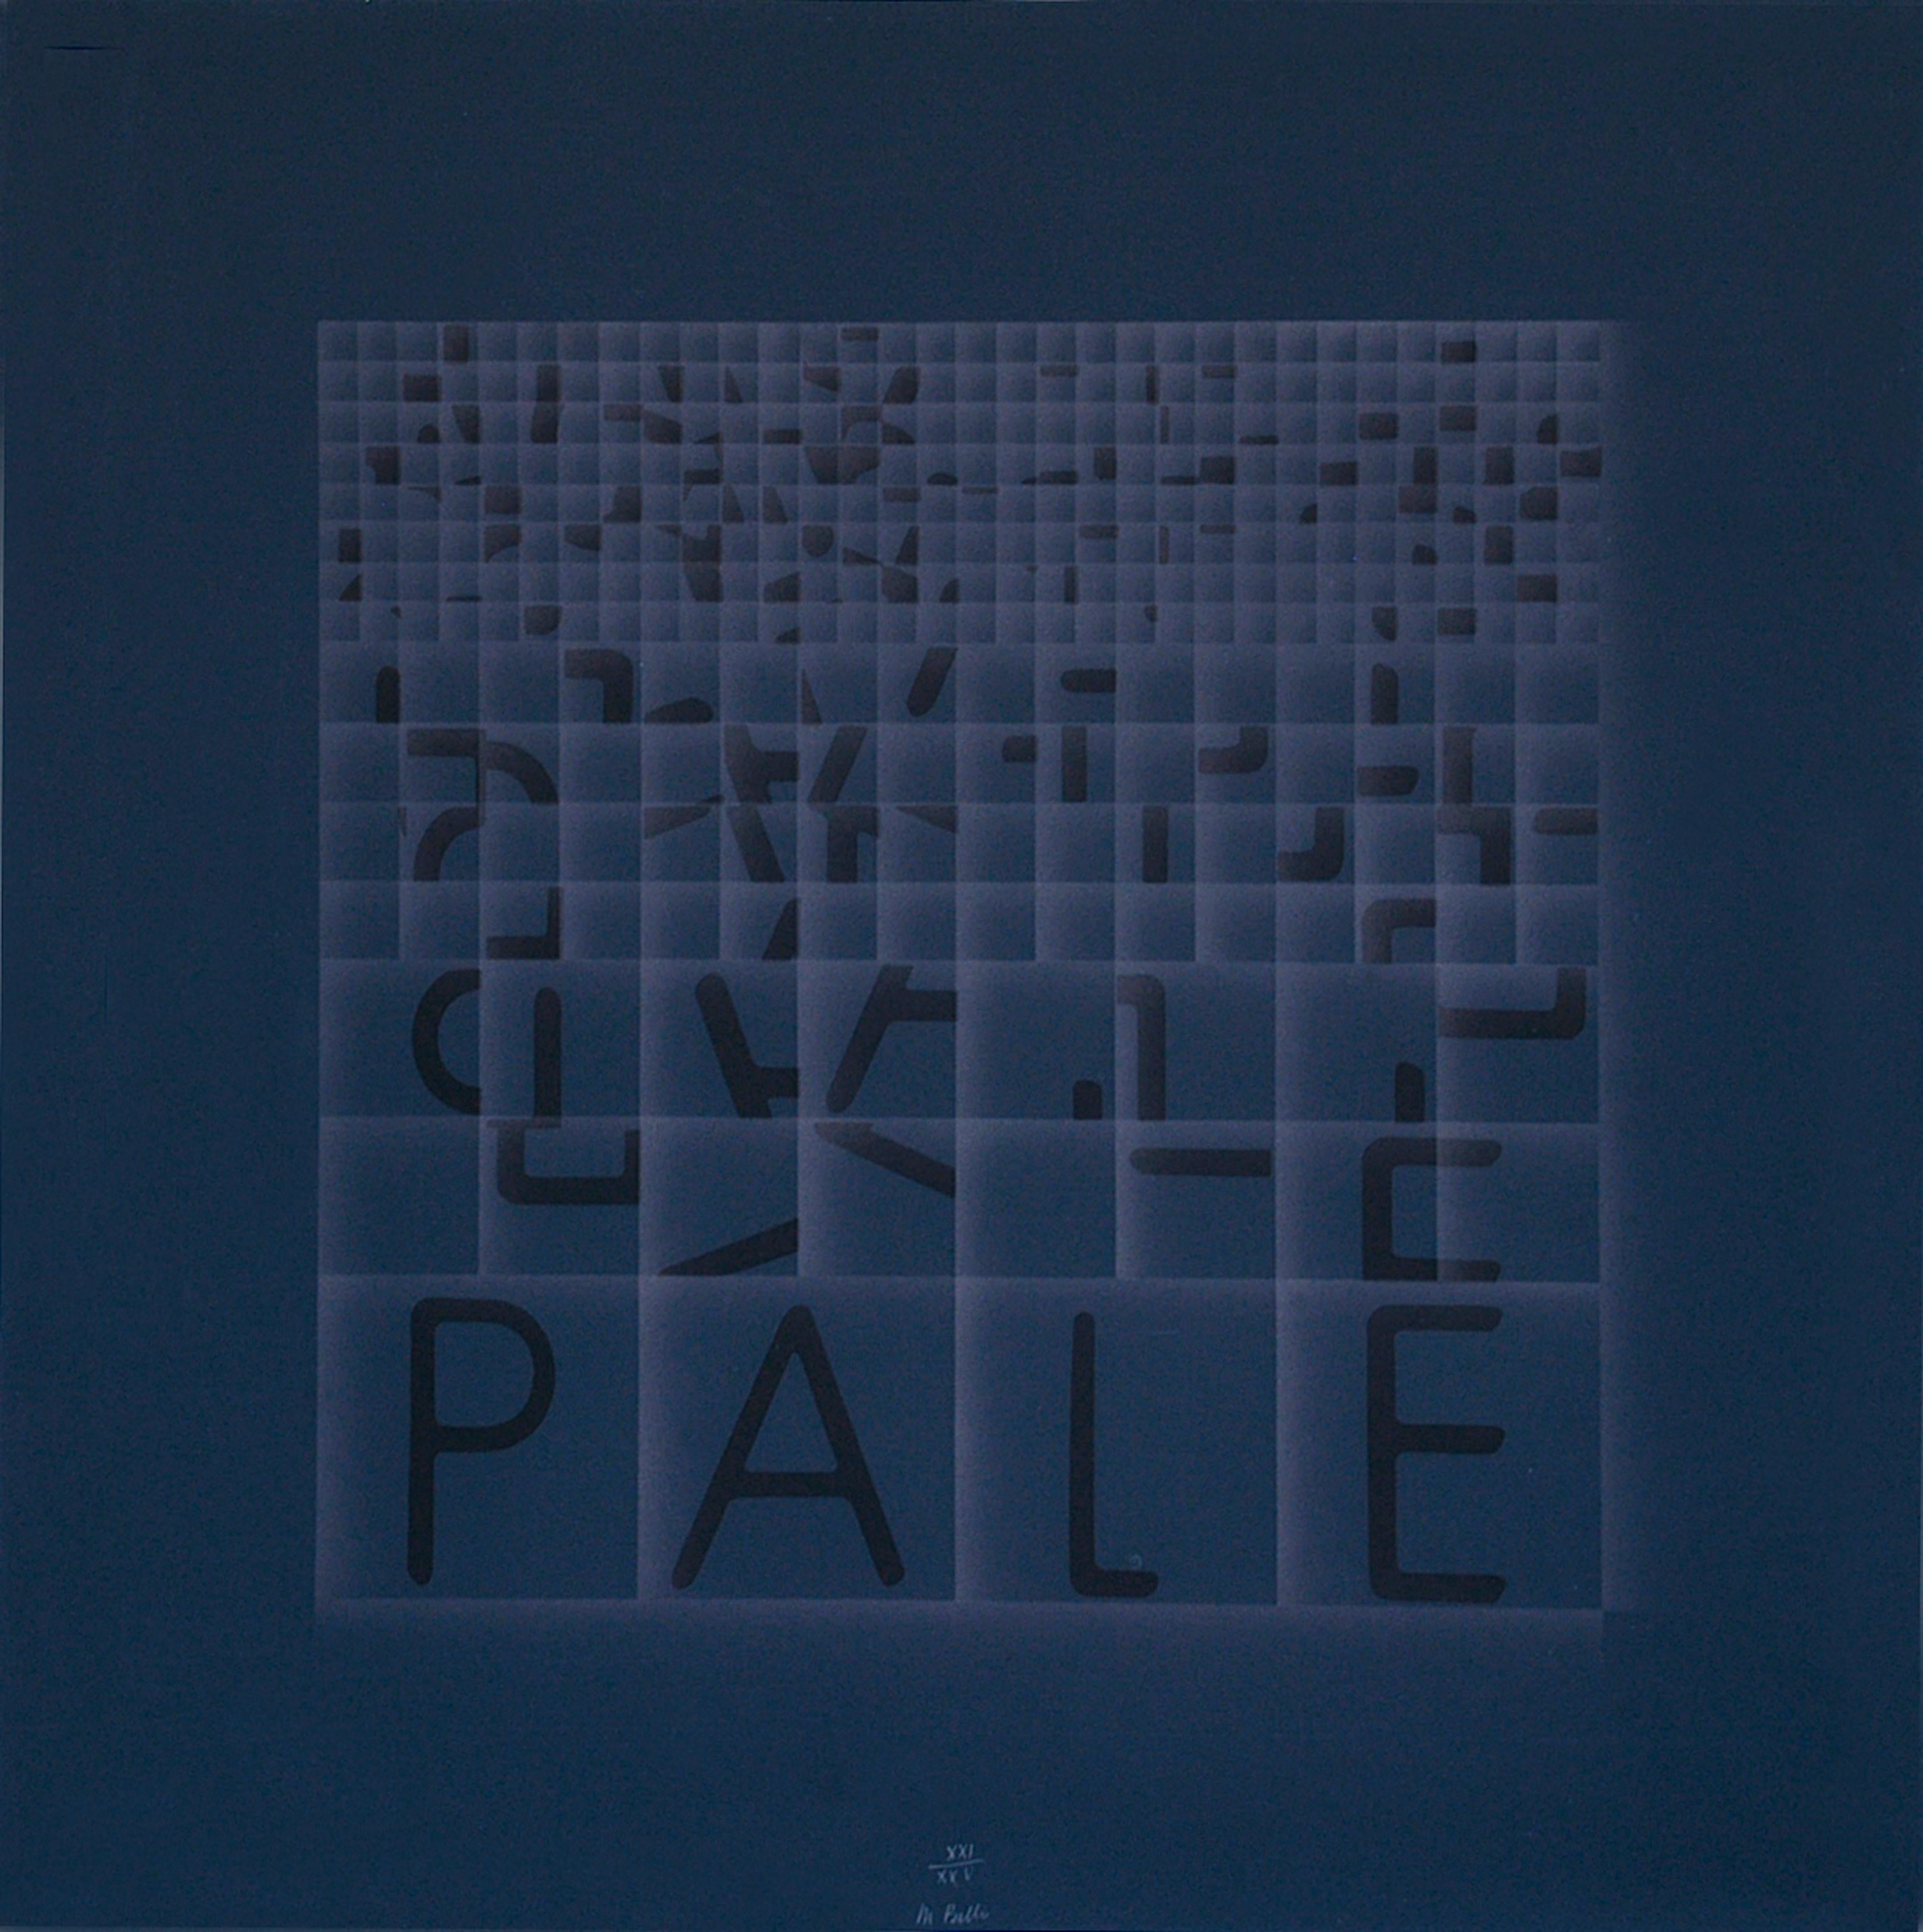 Pale (Blades) - Screen Print by Bruno di Bello - 1980 ca.